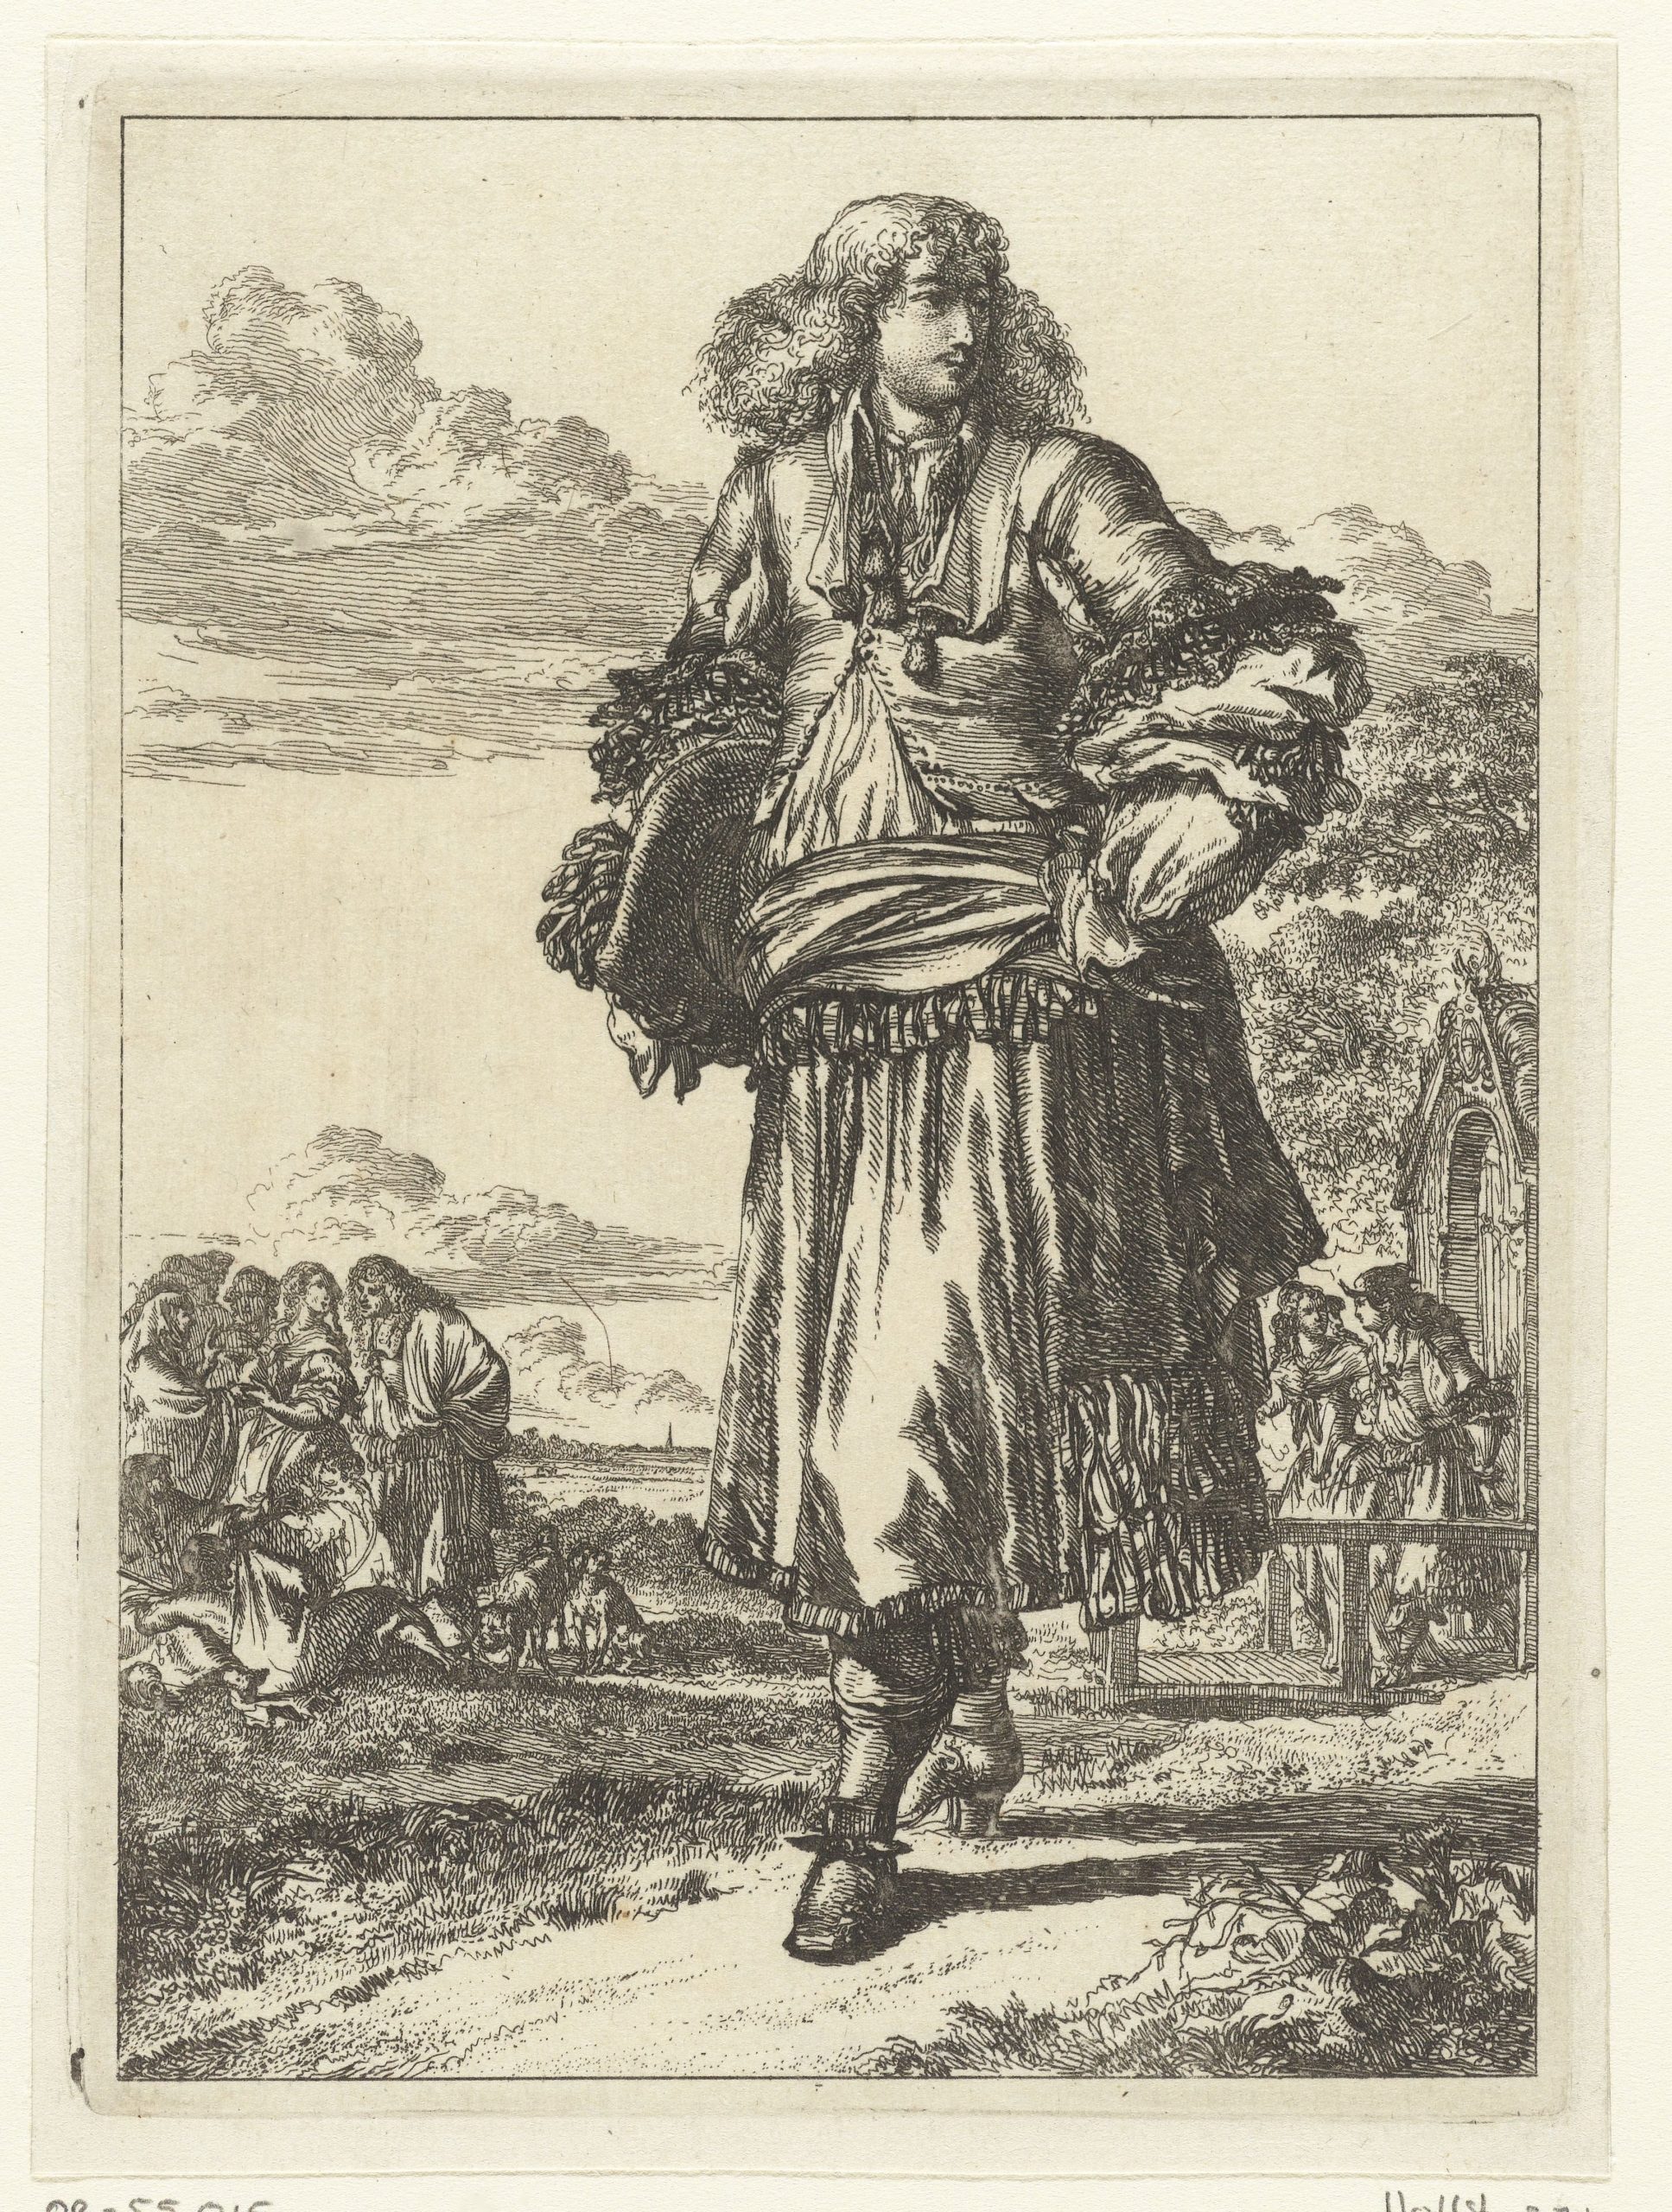 Romeyn de Hooghe, Figures à la Mode no. 9, Man Wearing Rhinegrave Breeches, engraving, 16.6 x 12.3 cm, 1670-1685 (Rijksmuseum, Amsterdam)